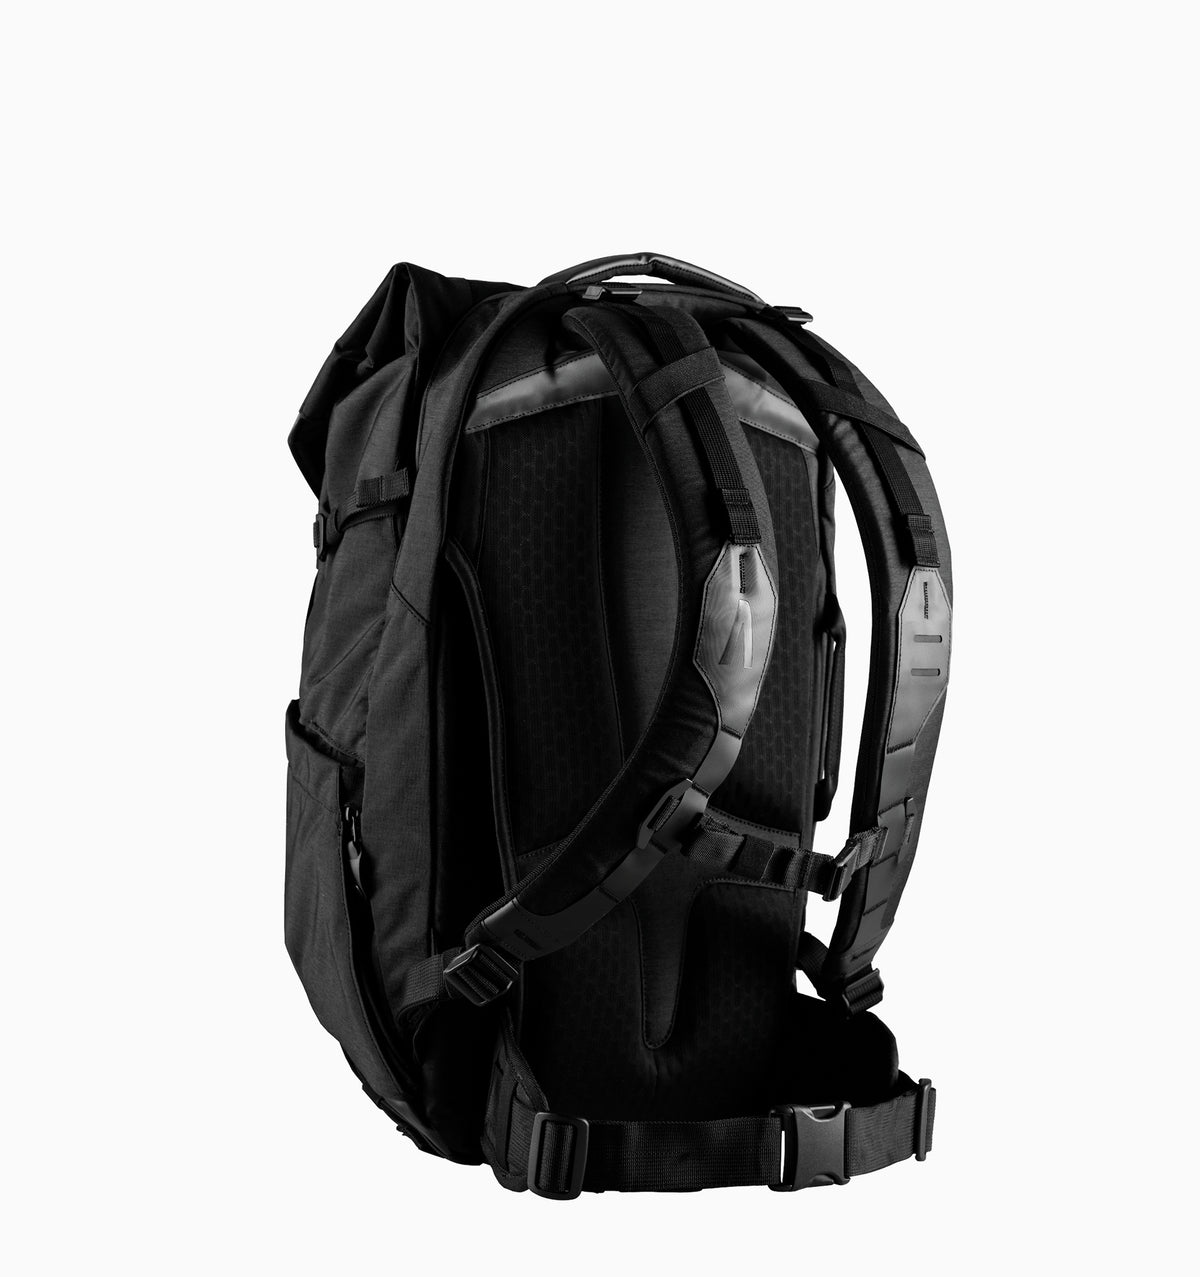 Boundary Supply Prima System Modular Travel Backpack 16" 38L - Obsidian Black